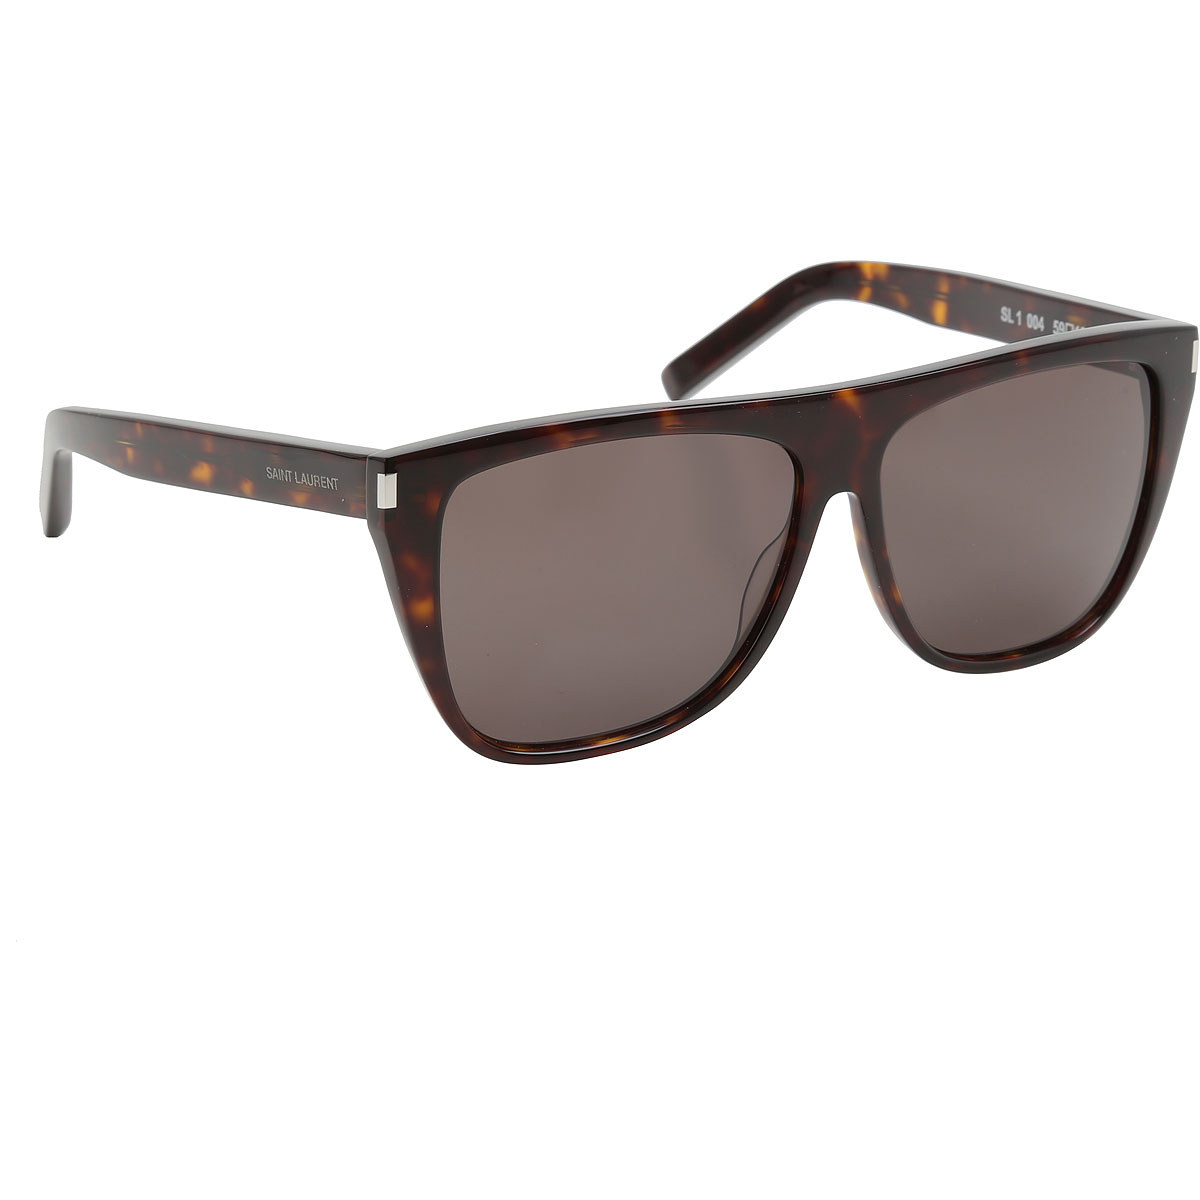 Sunglasses Yves Saint Laurent, Style code: sl1-004-